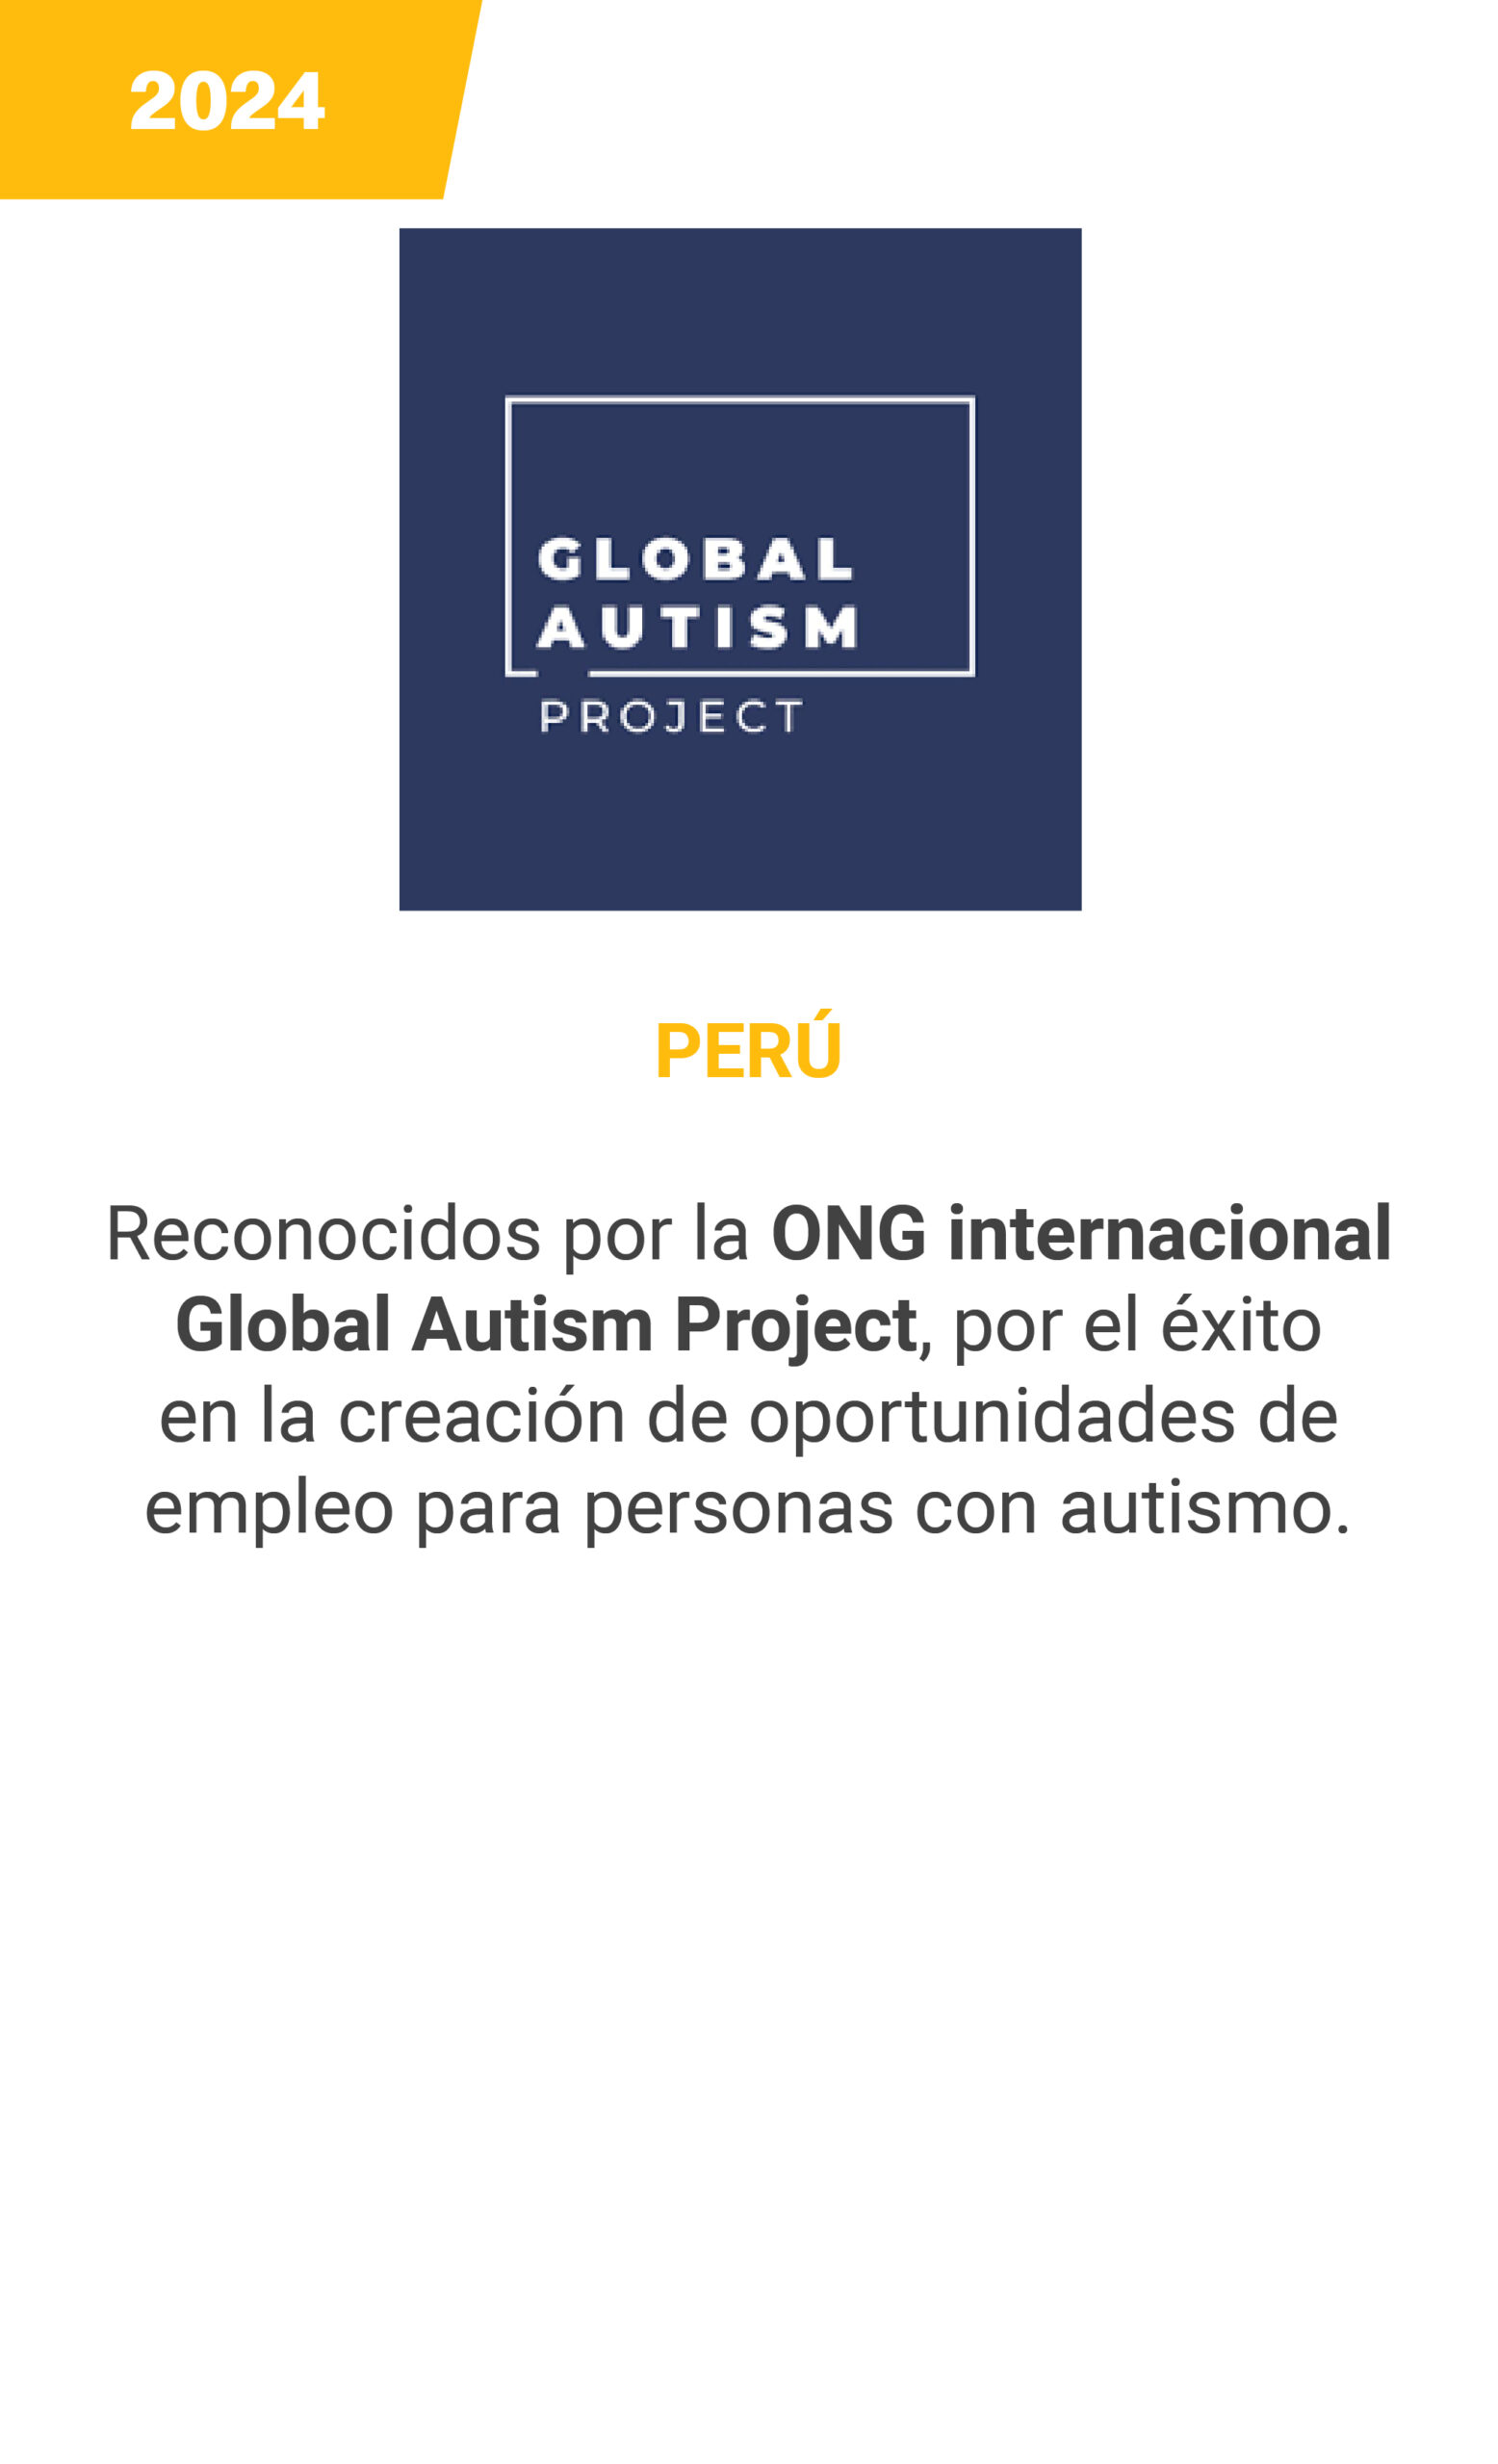 Global Autism - Peru - 2024 - mobile